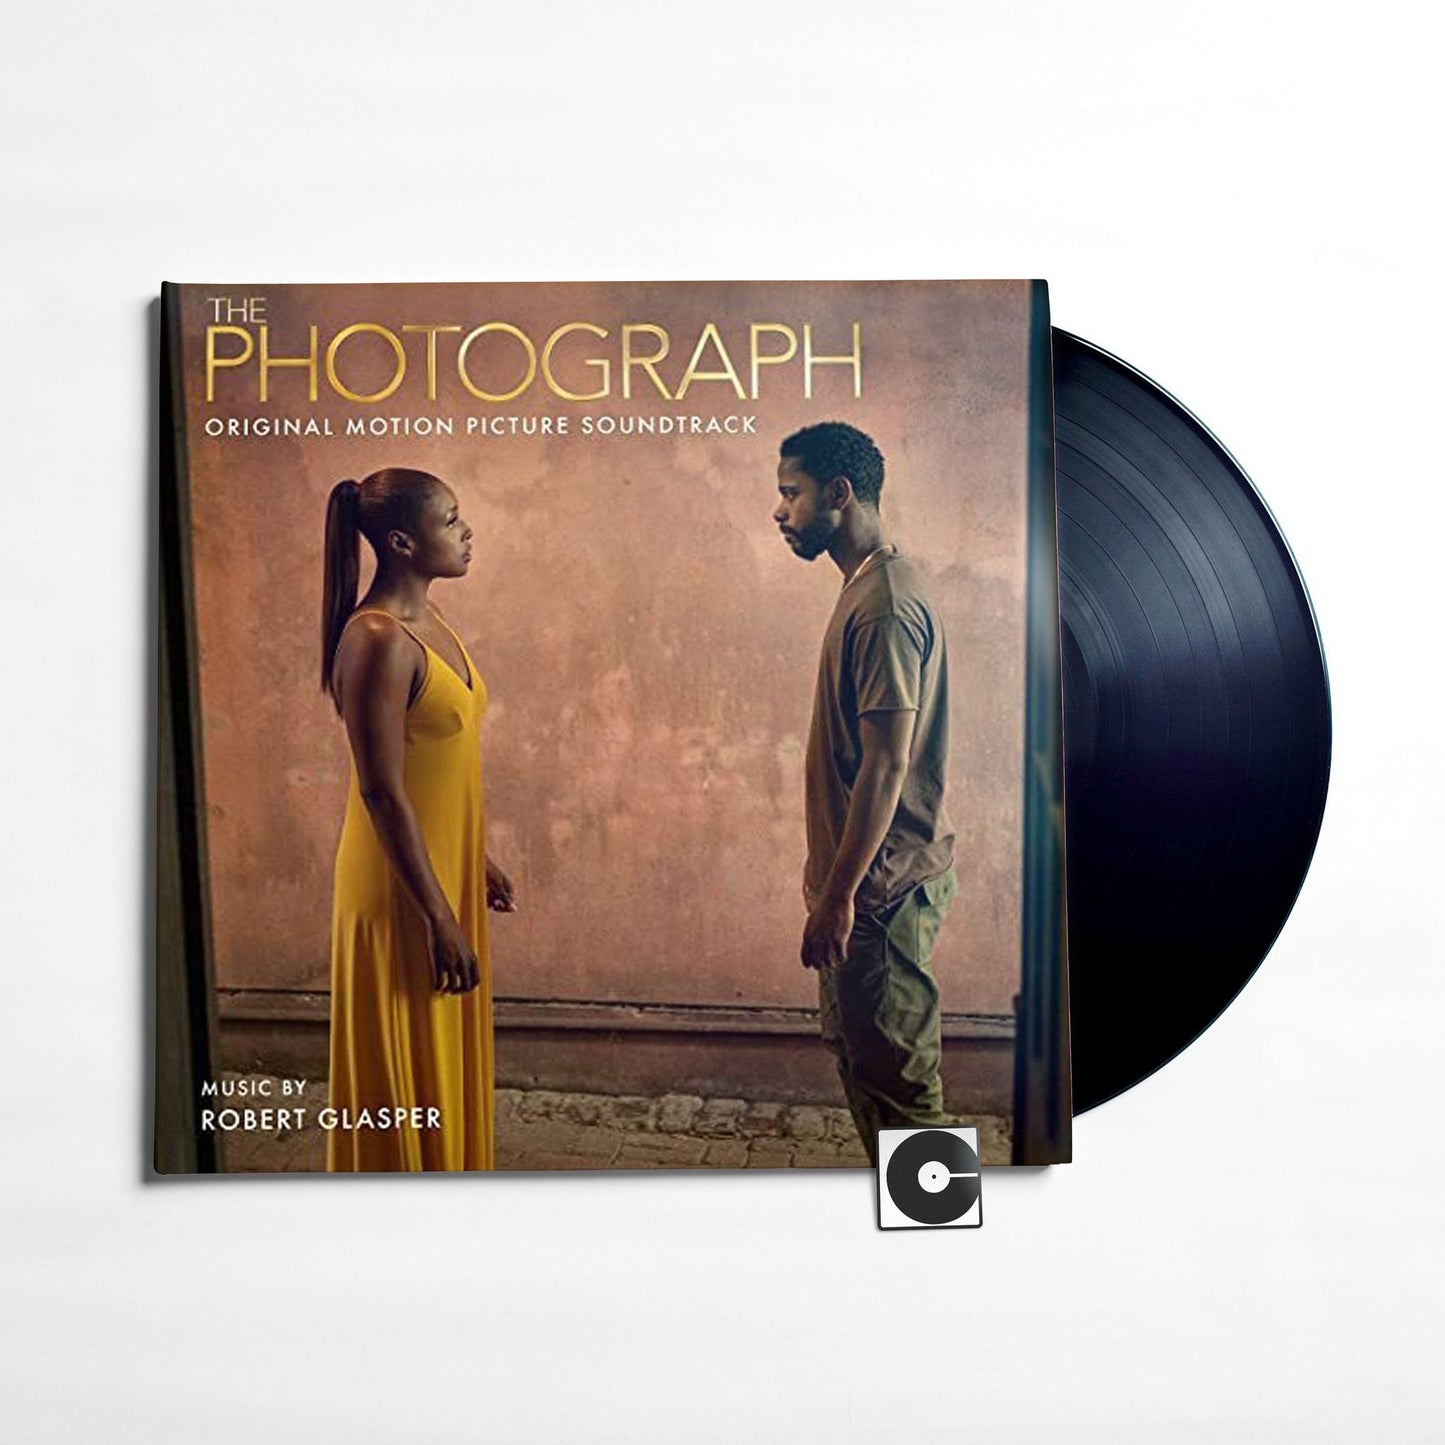 Robert Glasper - "The Photographer: Original Motion Picture Soundtrack"